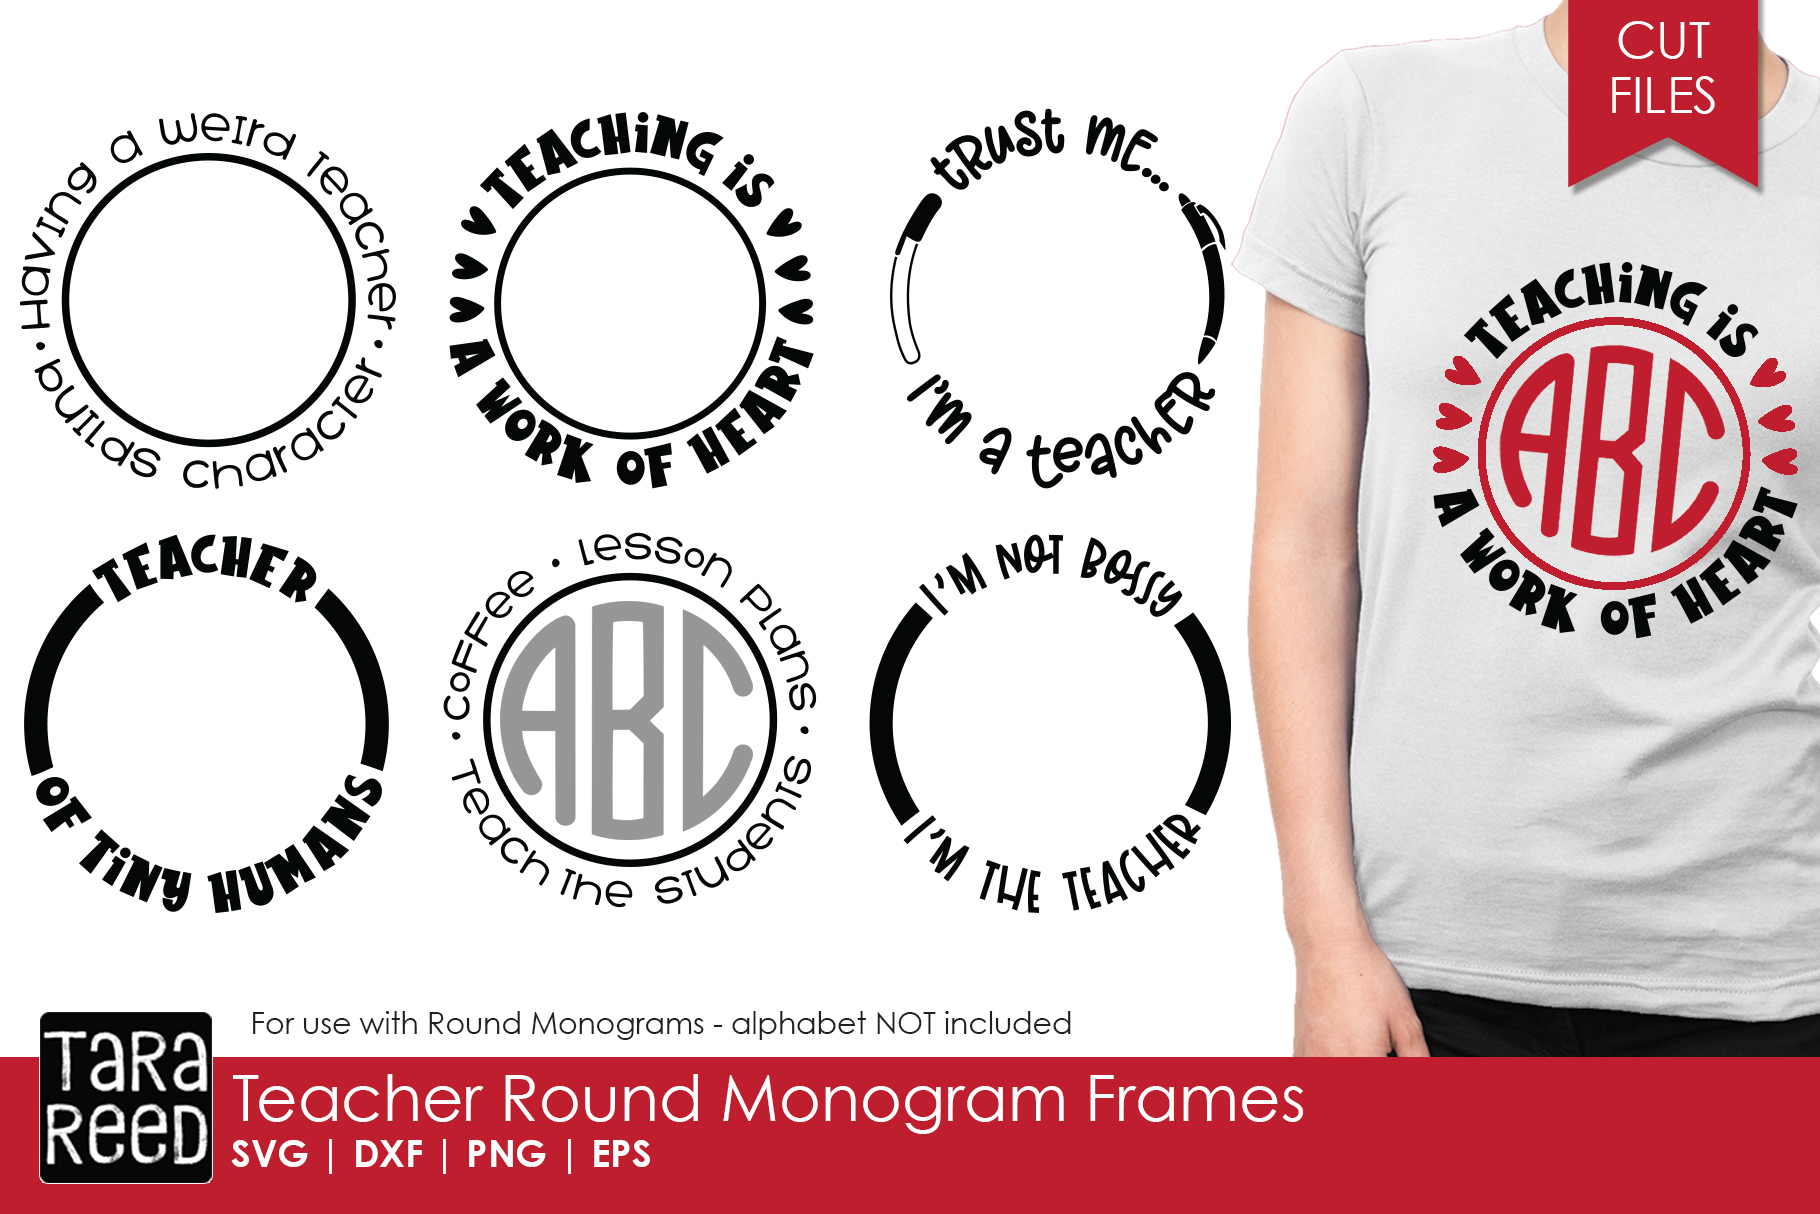 Download Teacher Round Monogram Frames - SVG and Cut Files (252549) | Cut Files | Design Bundles